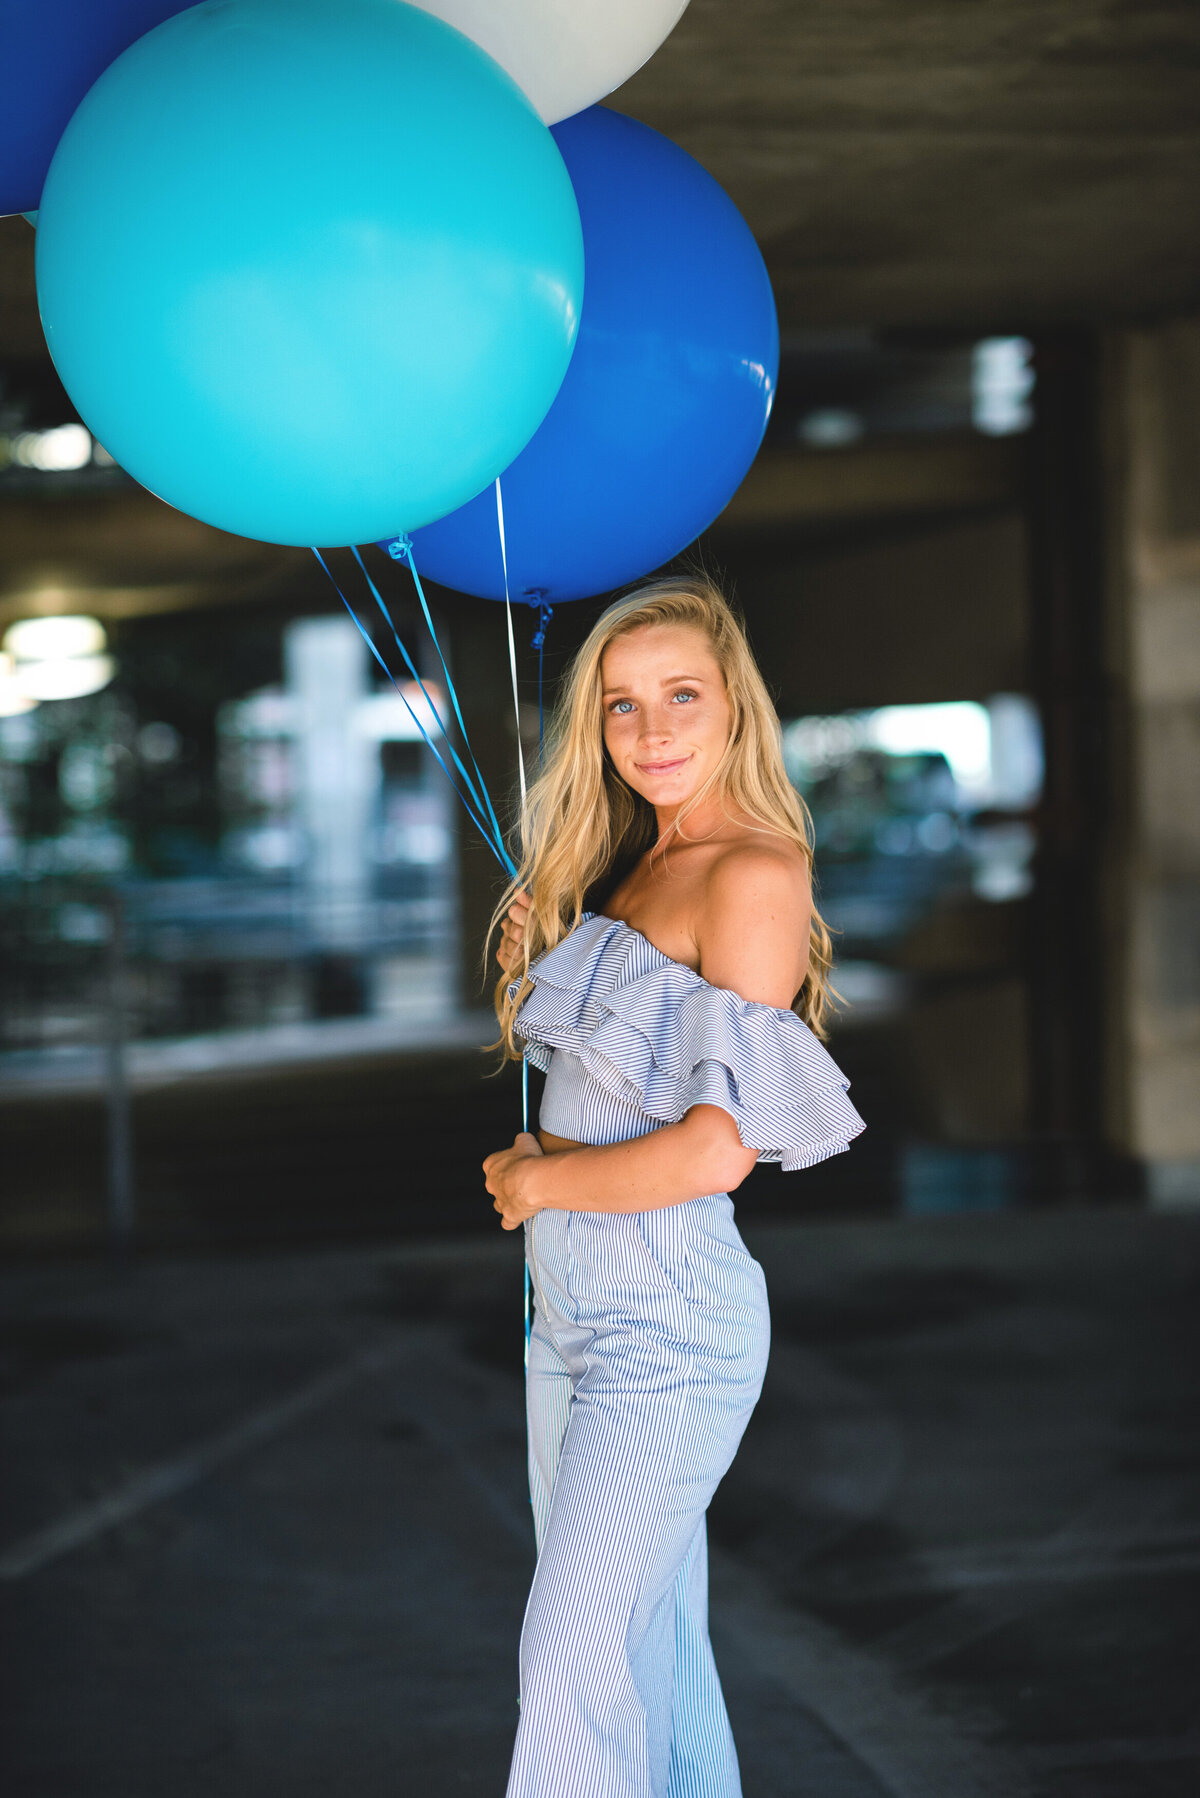 Des-Moines-Iowa-Senior-Girl-Theresa-Schumacher-Photography-Urban-Downtown-Balloons-2